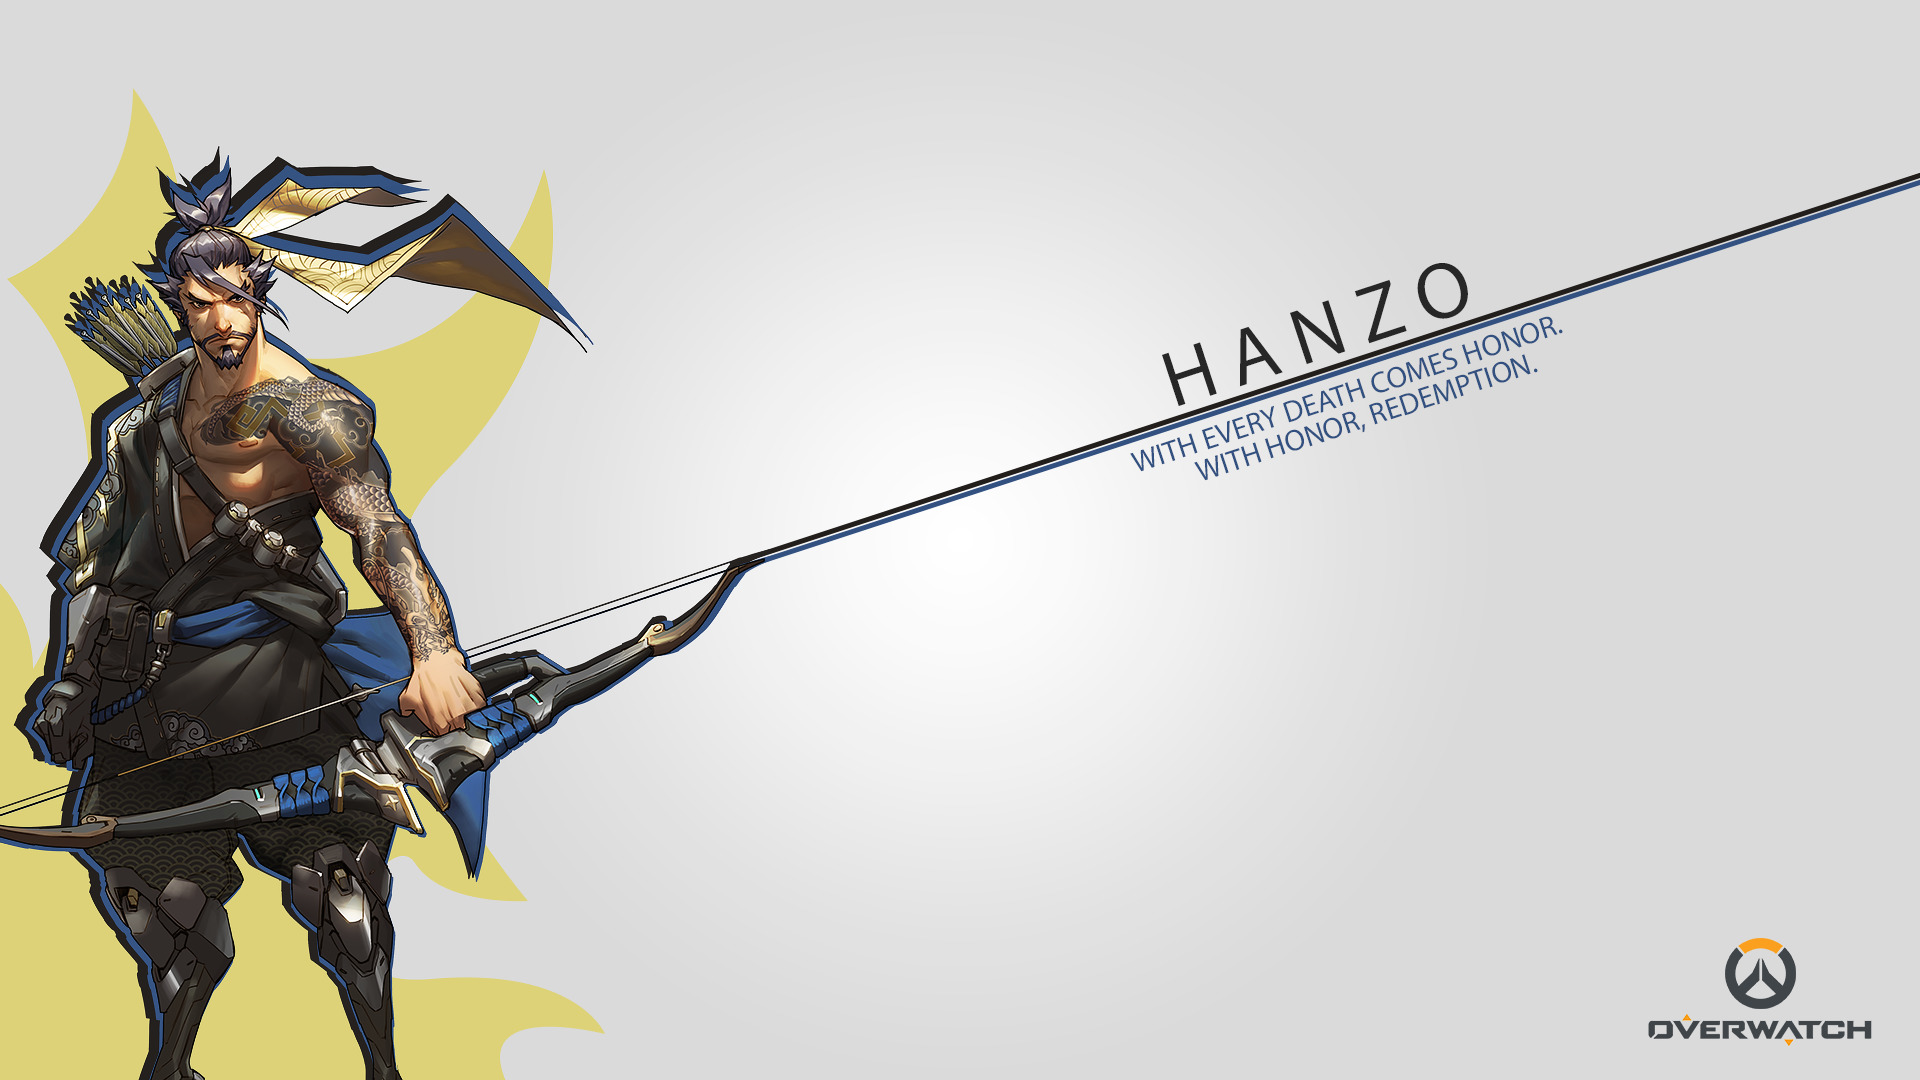 rangaming (Author), Hanzo, Hanzo Shimada, Overwatch, Blizzard Entertainment, Video Games Wallpaper